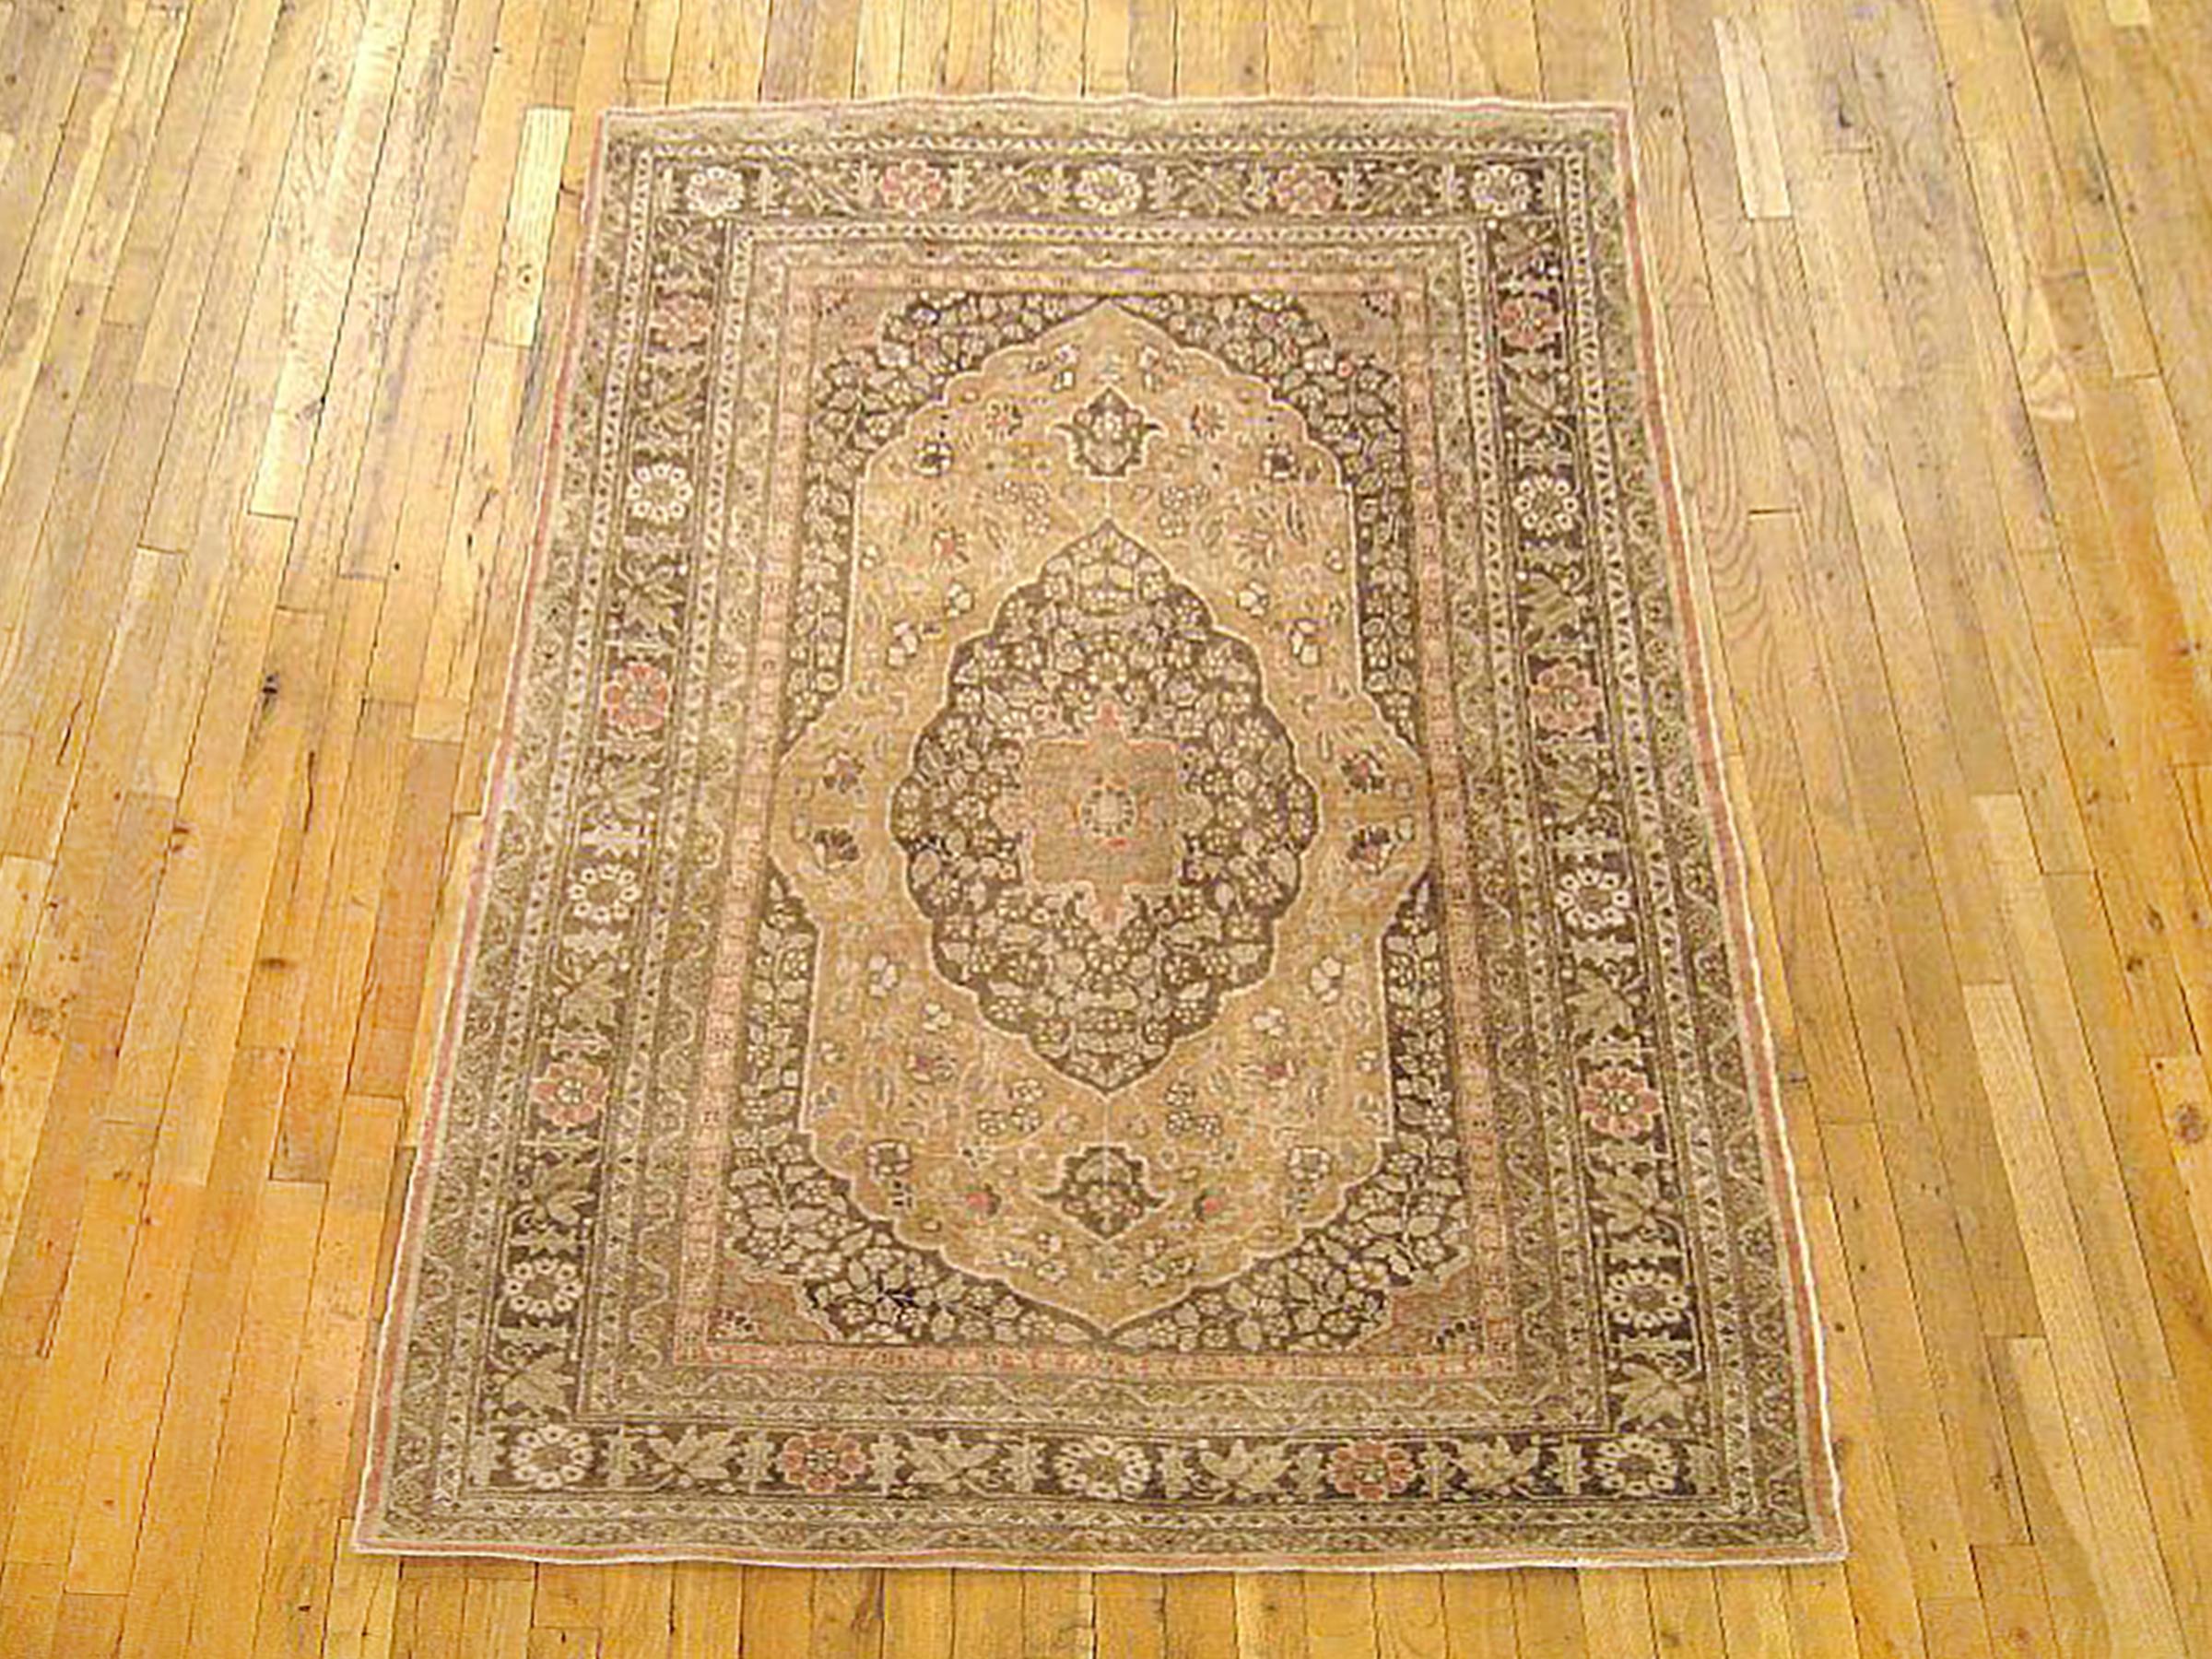 Antique Perisan Tabriz oriental carpet, circa 1920, small sized

An antique Persian Tabriz oriental carpet, circa 1920. Size: 6'0